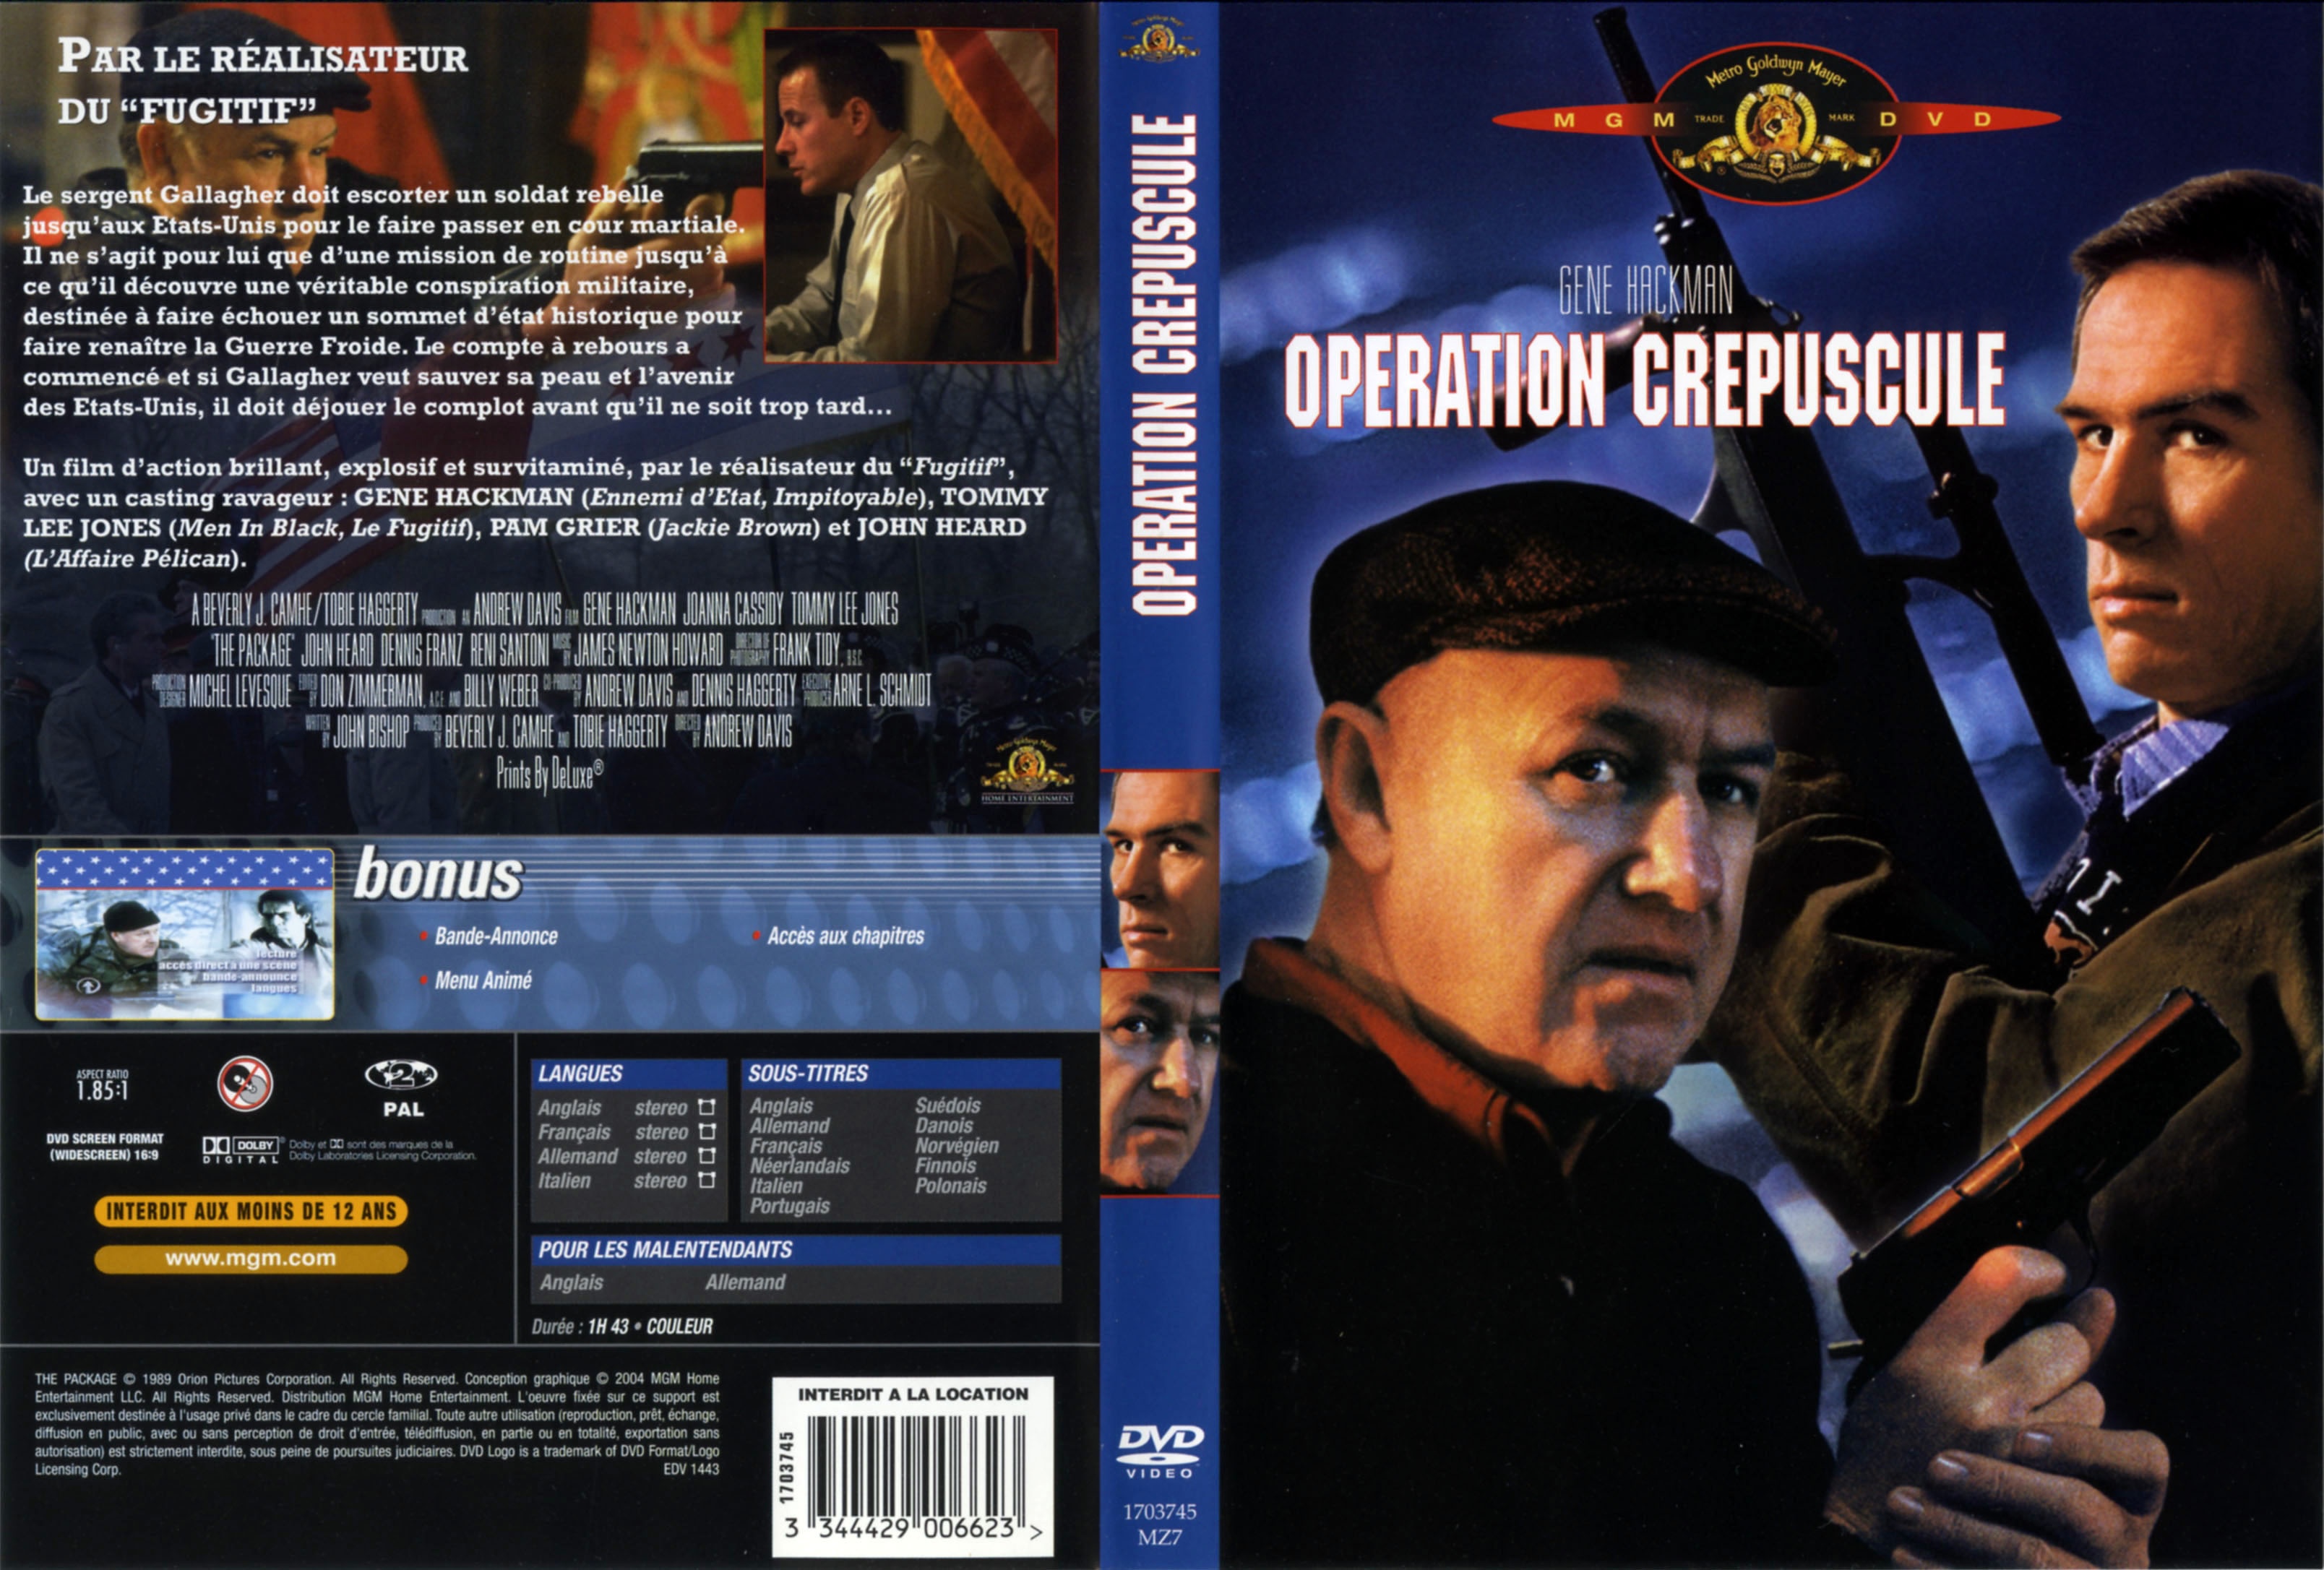 Jaquette DVD Opration crpuscule